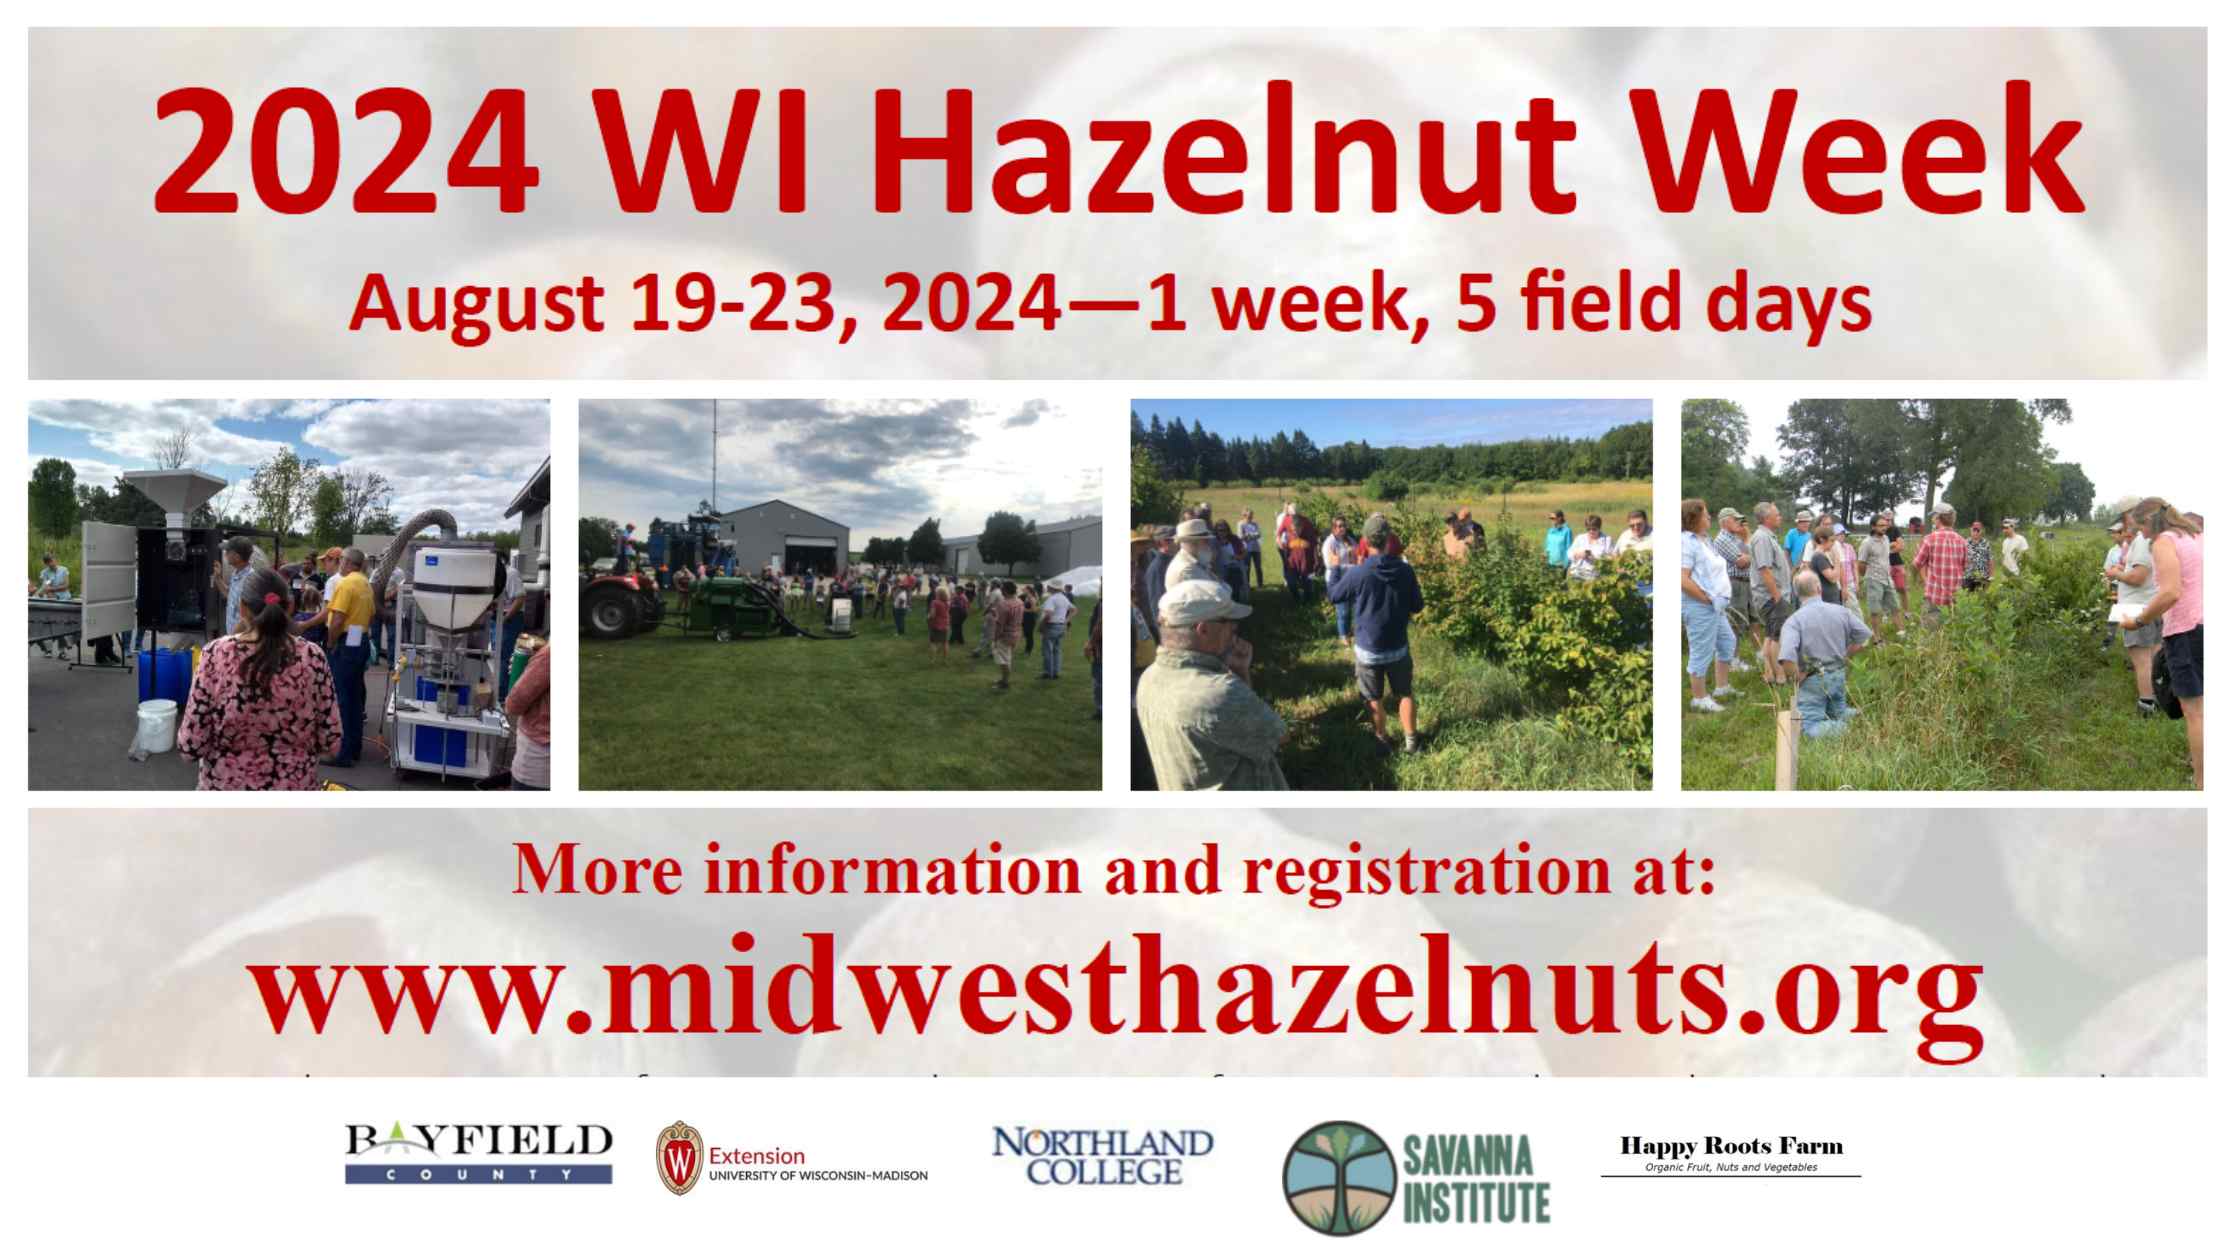 2024 Wisconsin Hazelnut Week